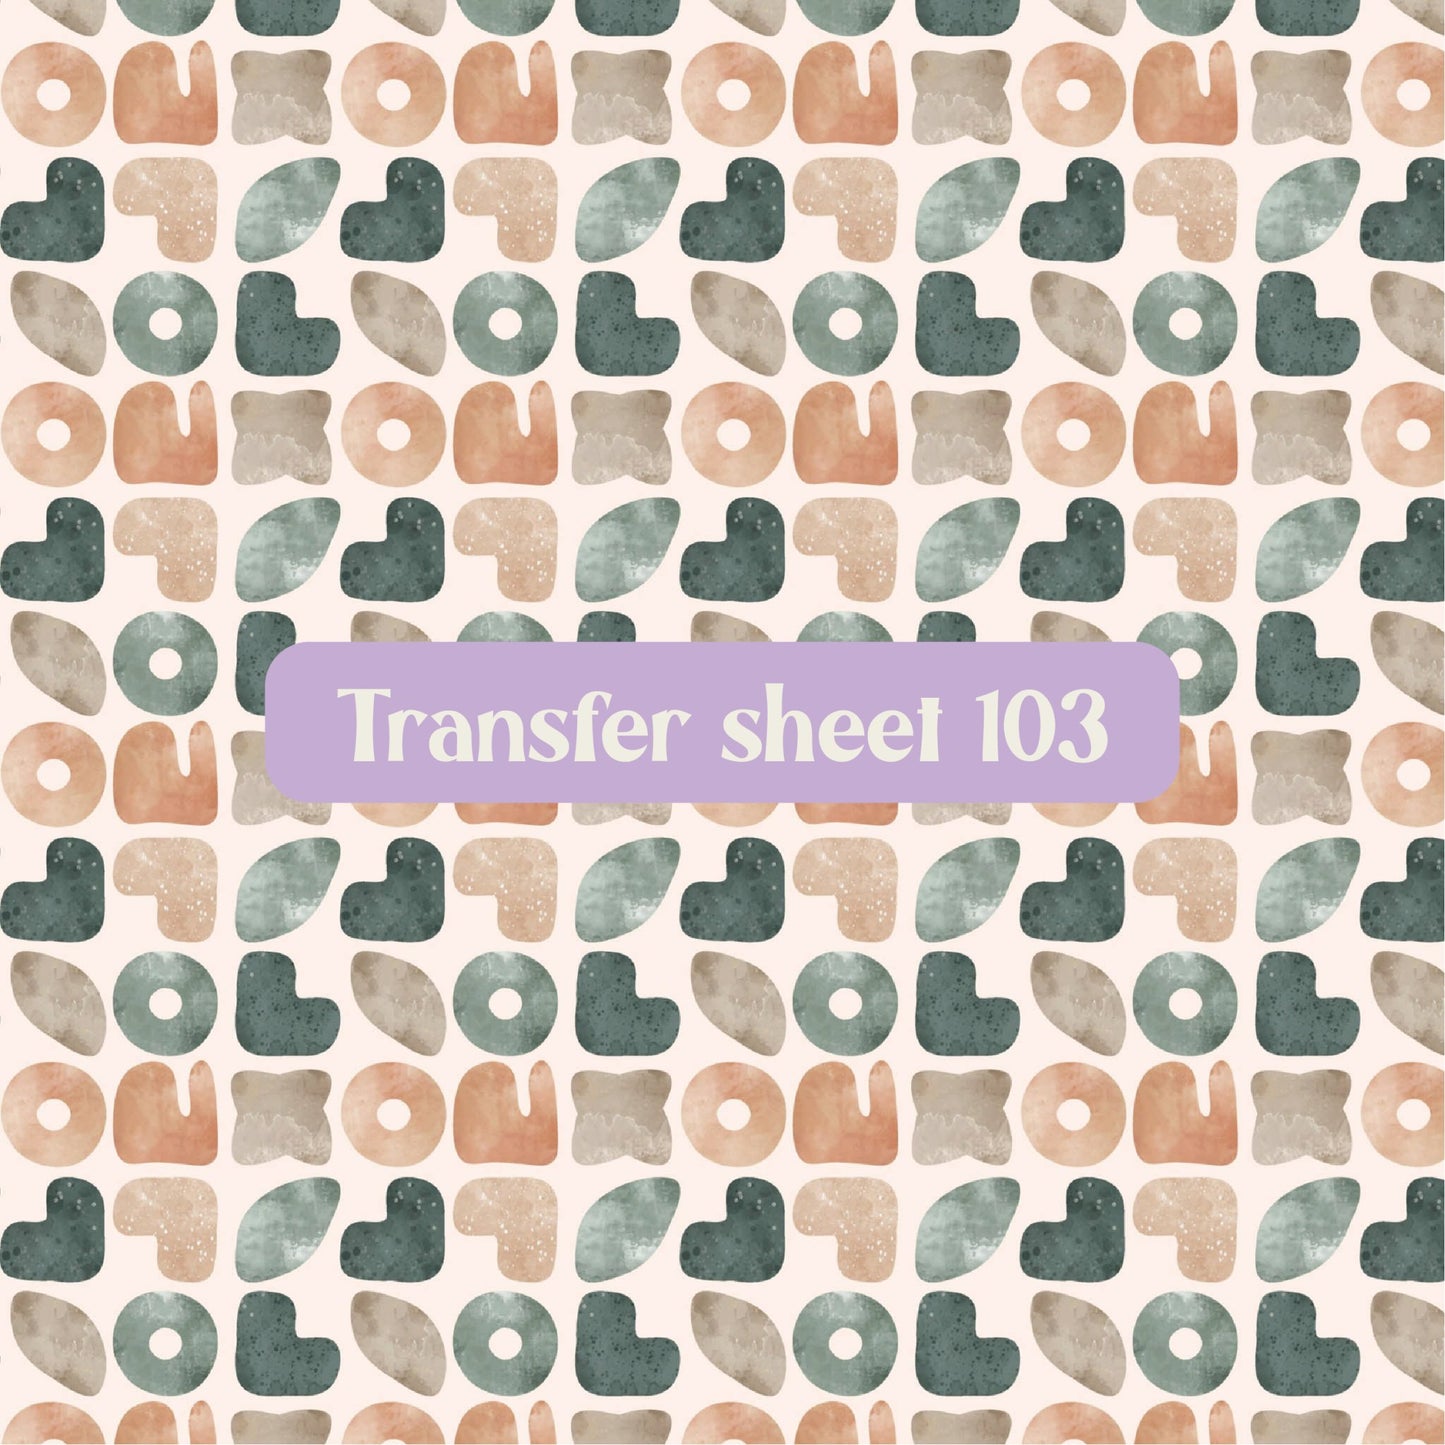 Transfer sheet 103 - Transfer paper - CLN Atelier